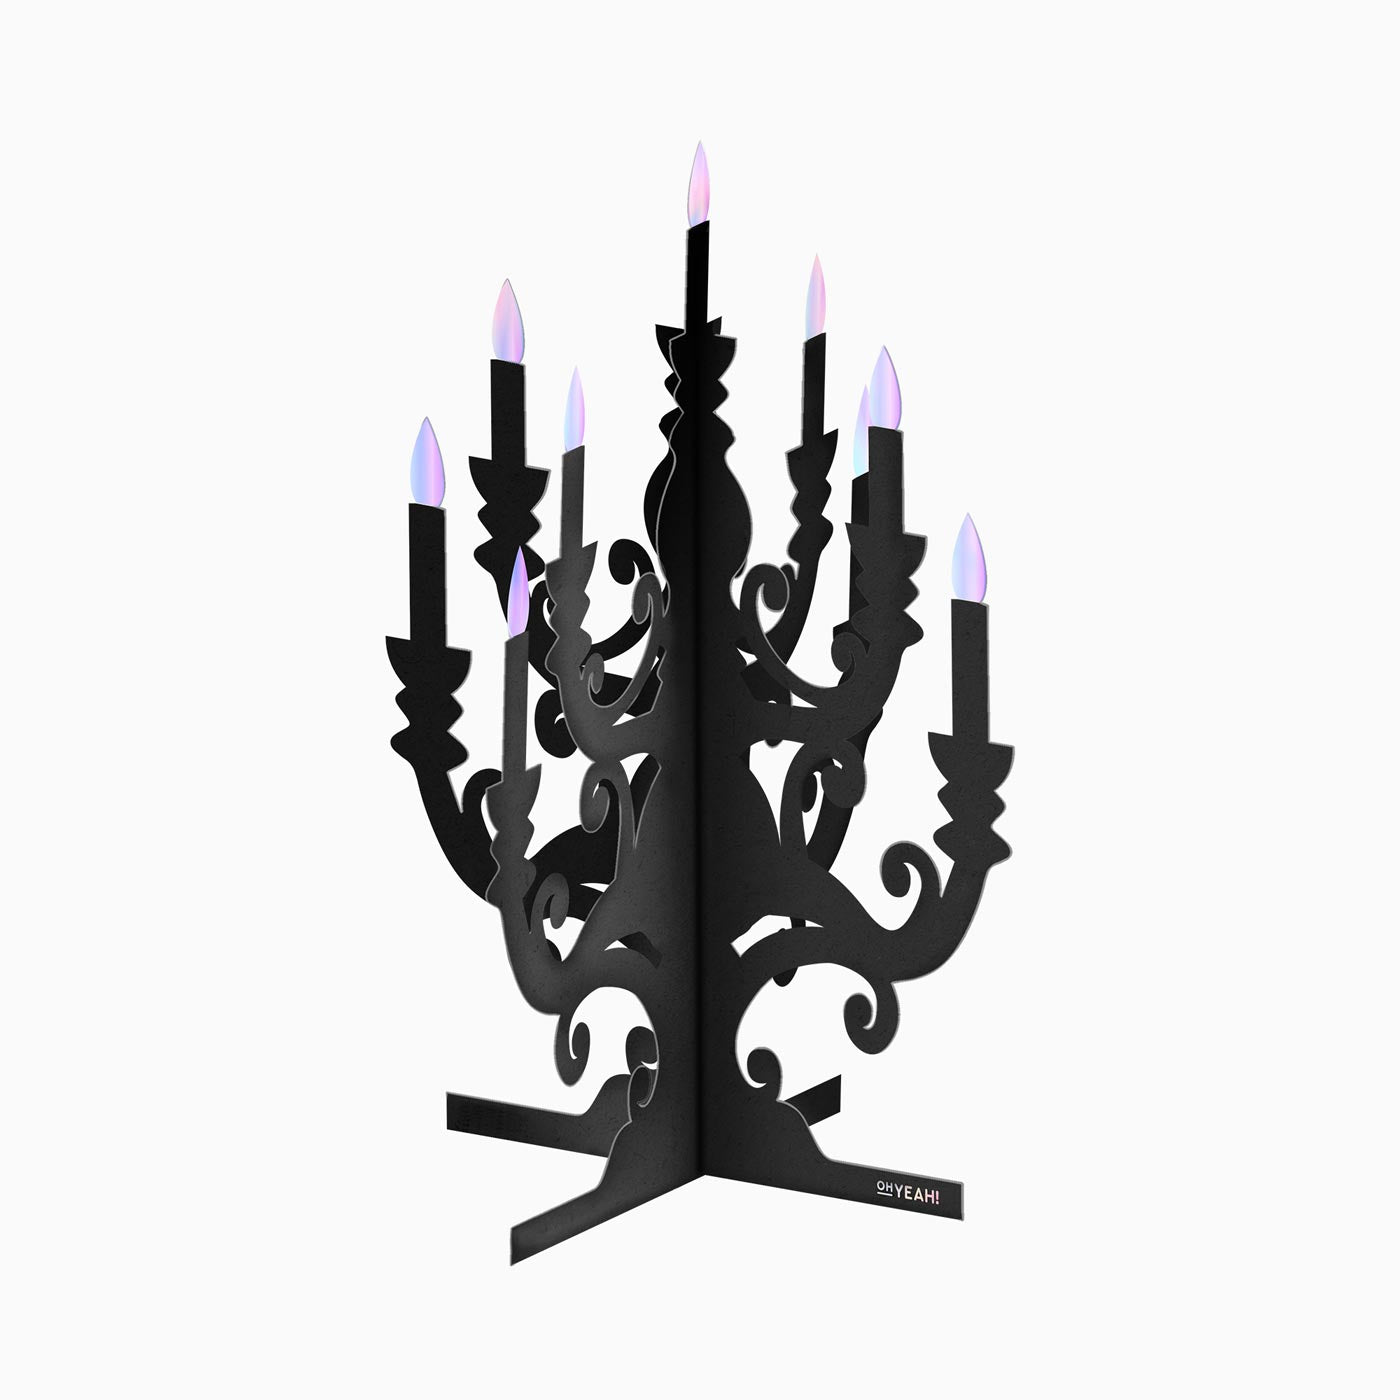 Halloween esoteric table candelabro